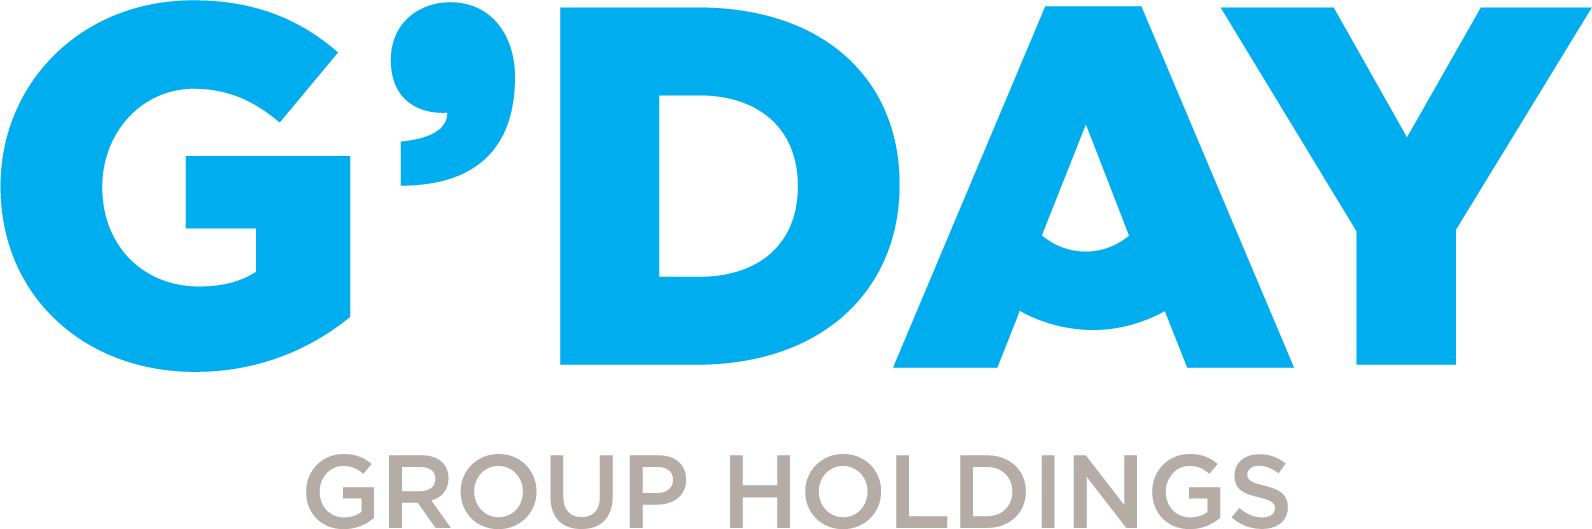 Gday group Logo